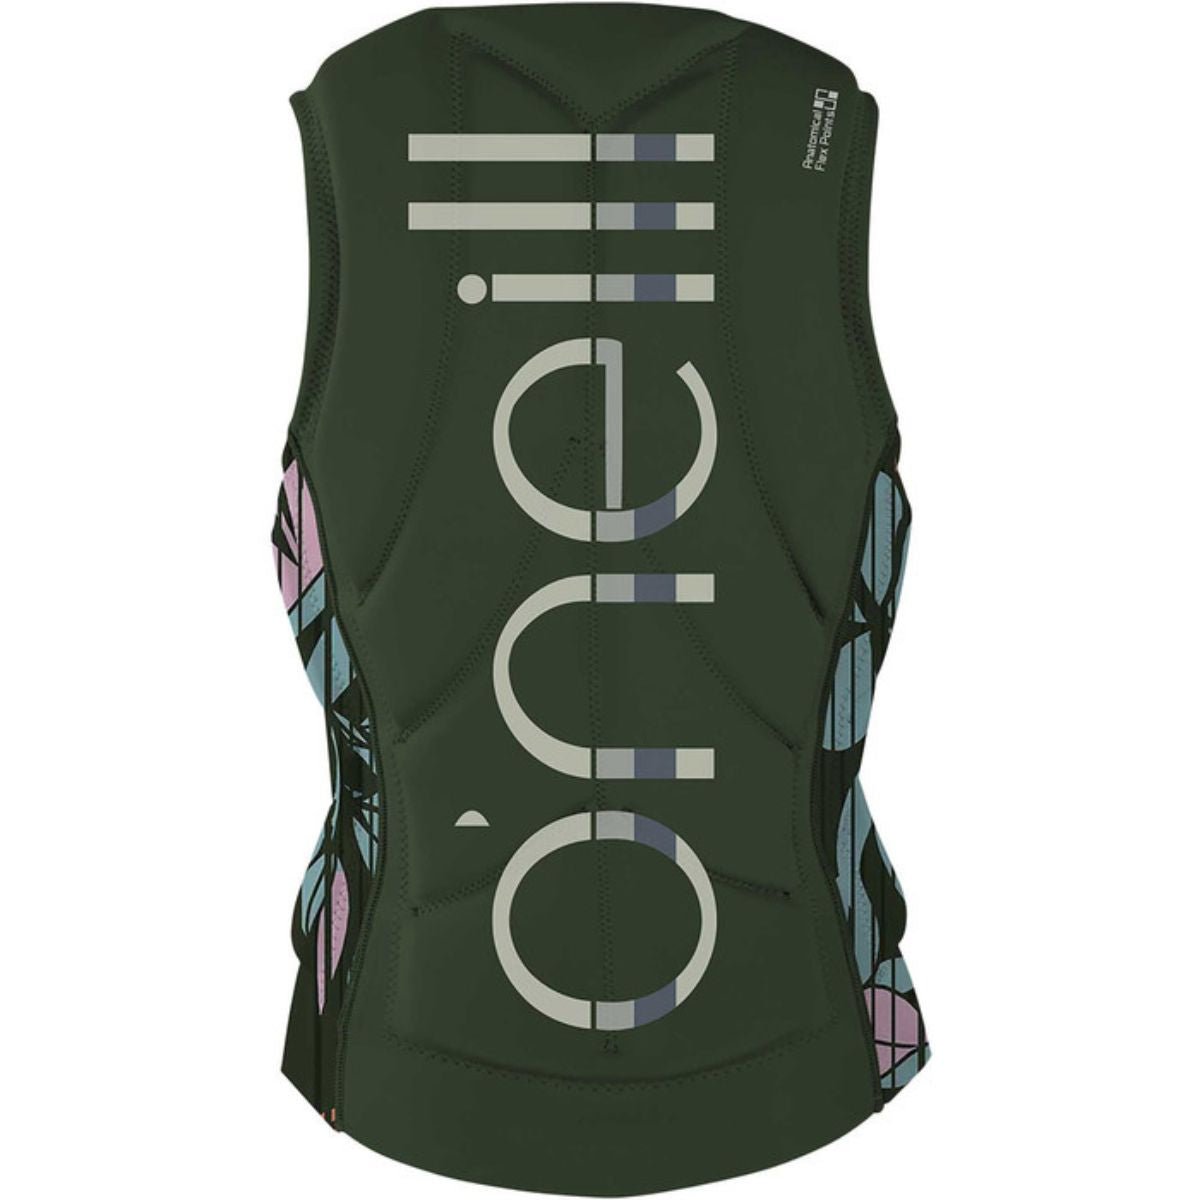 O'Neill Women's Slasher Comp Vest DKOLIVE/BAYLEN - BoardCo